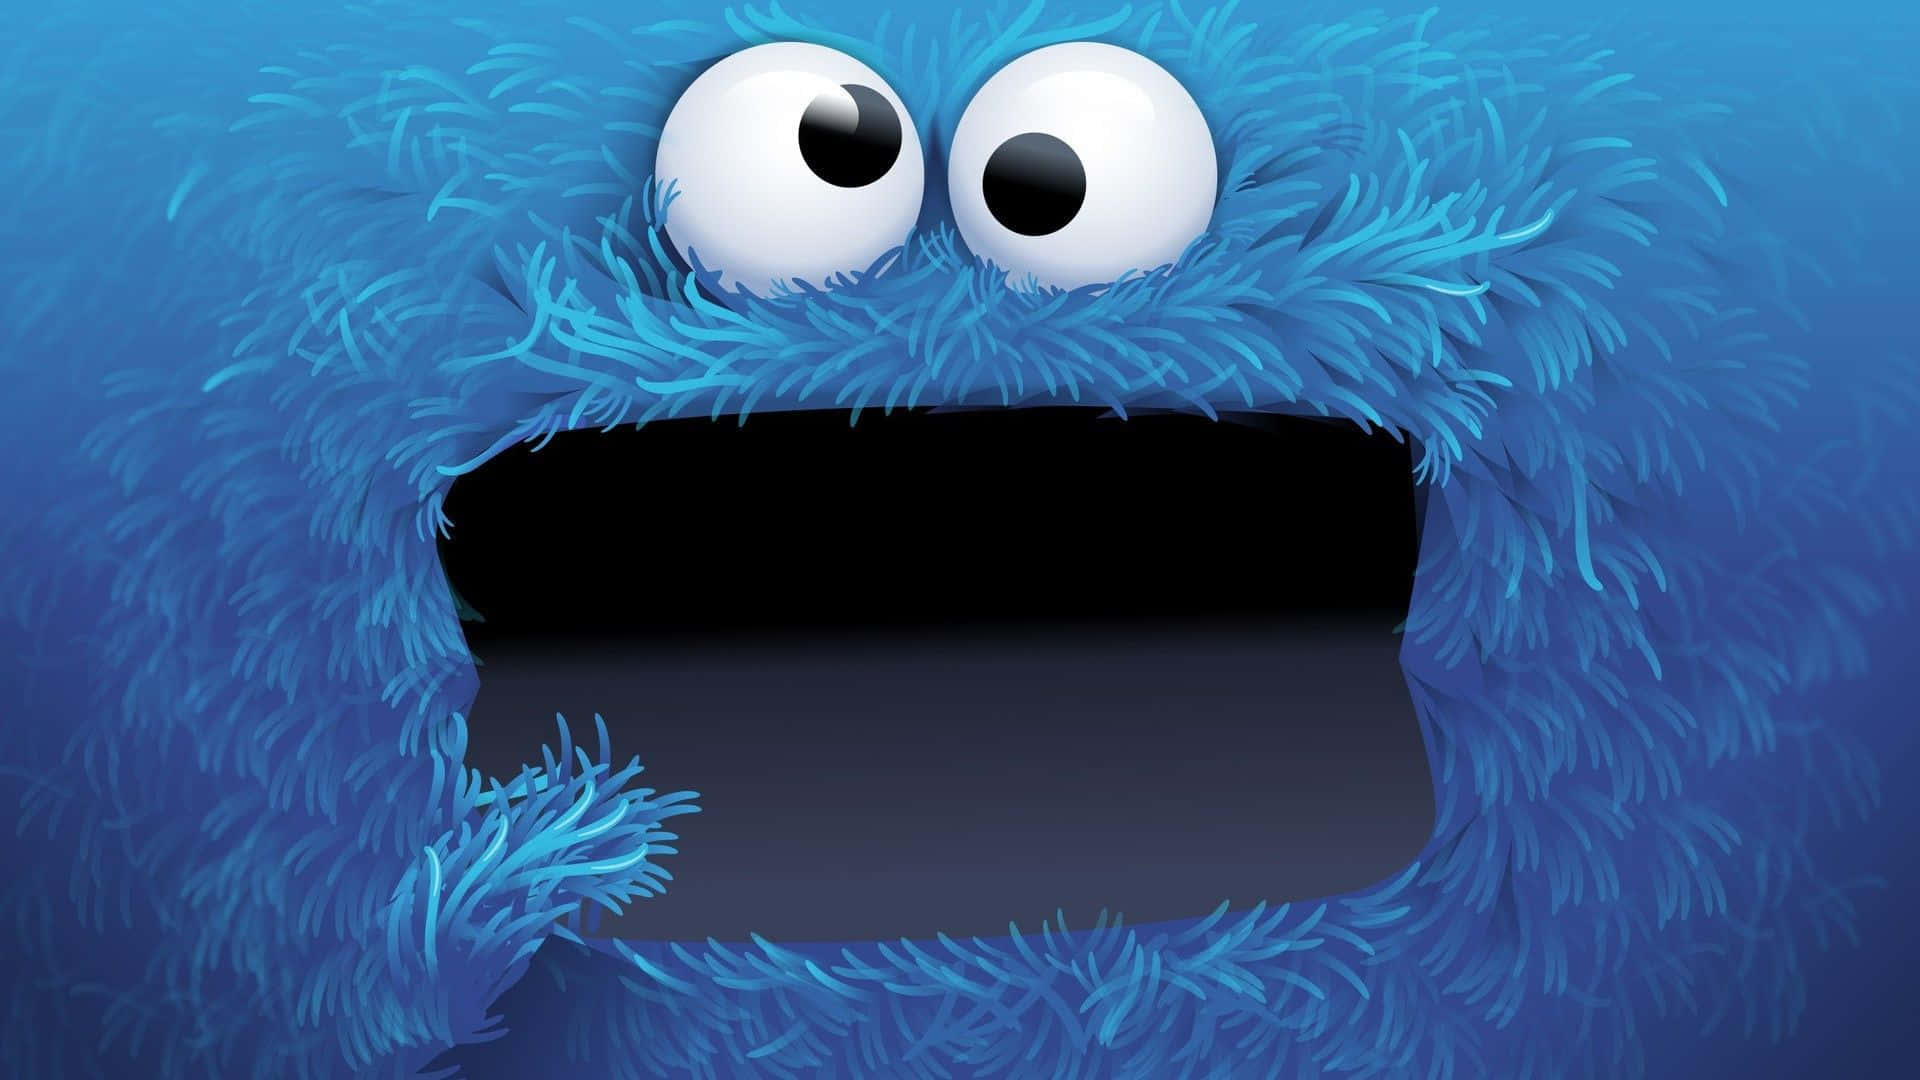 Cookie Monster enjoying delicious cookies